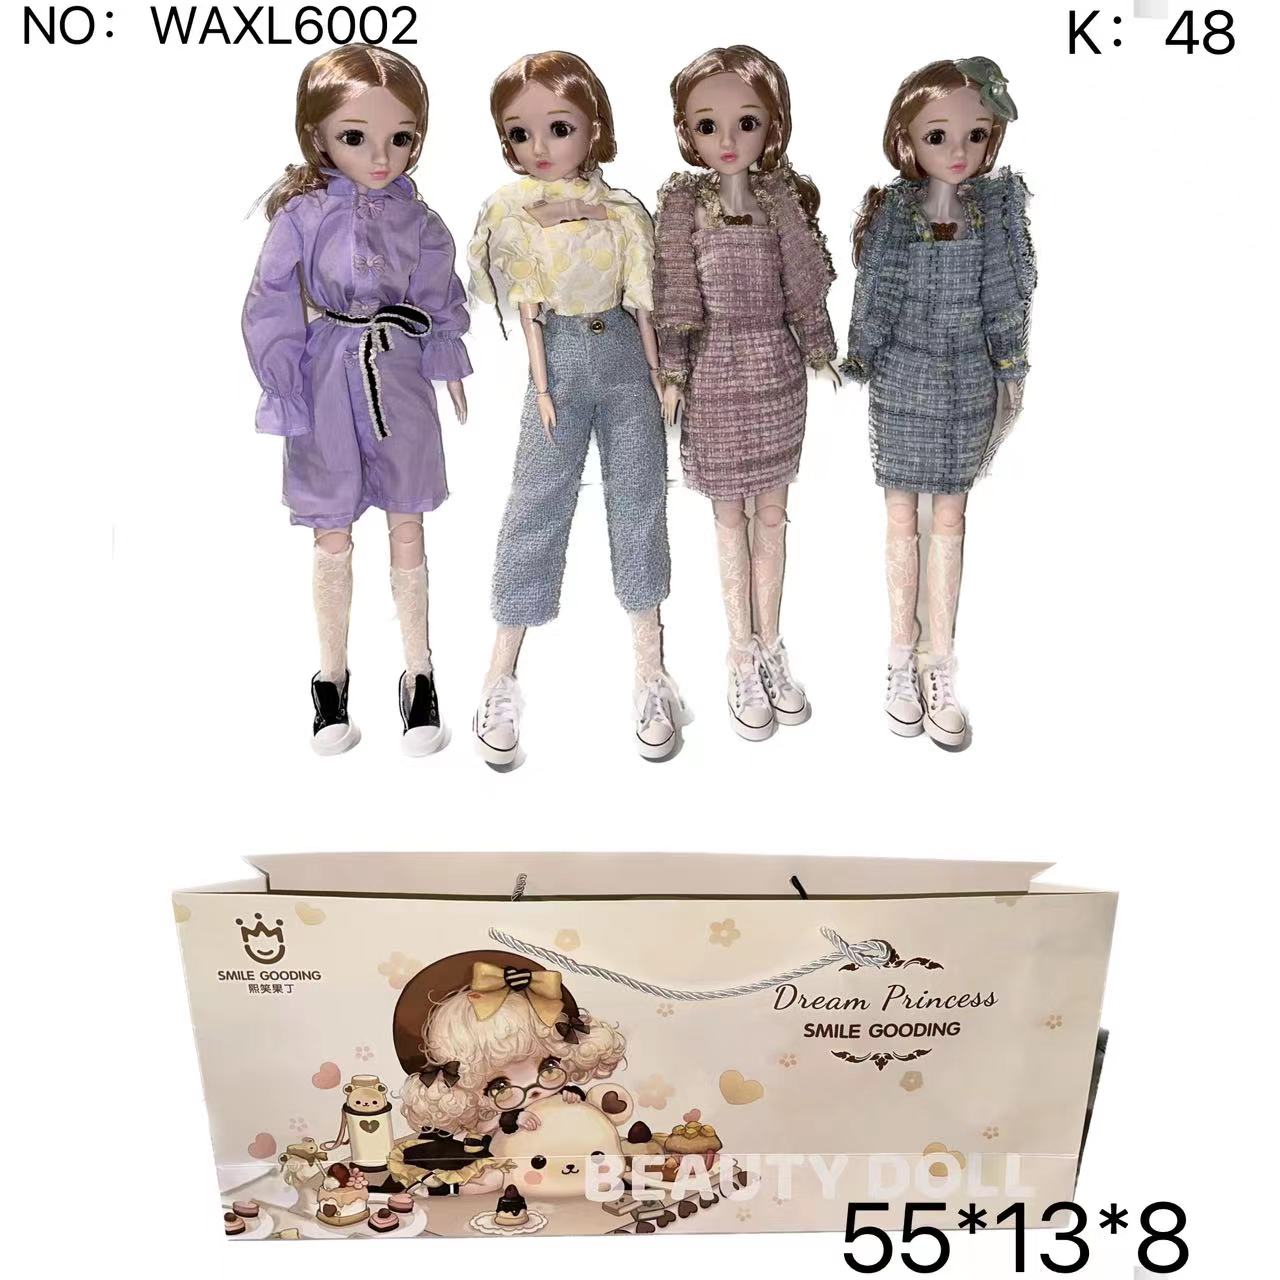 Кукла WAXL6002 в ассортименте в пакете - Йошкар-Ола 